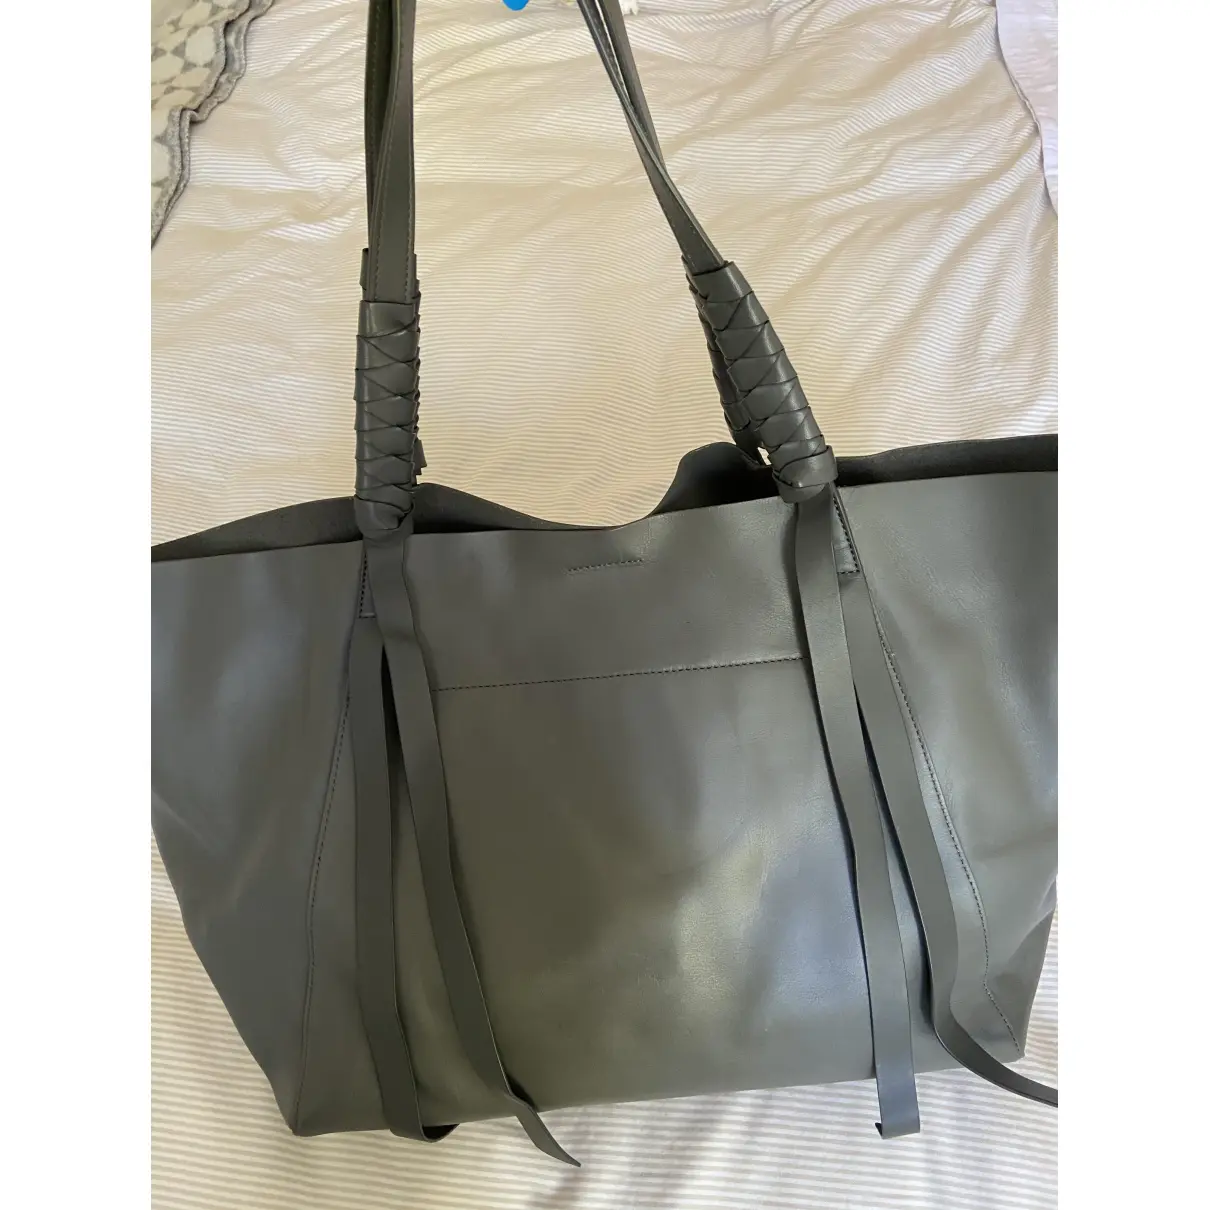 Buy All Saints Leather bag online